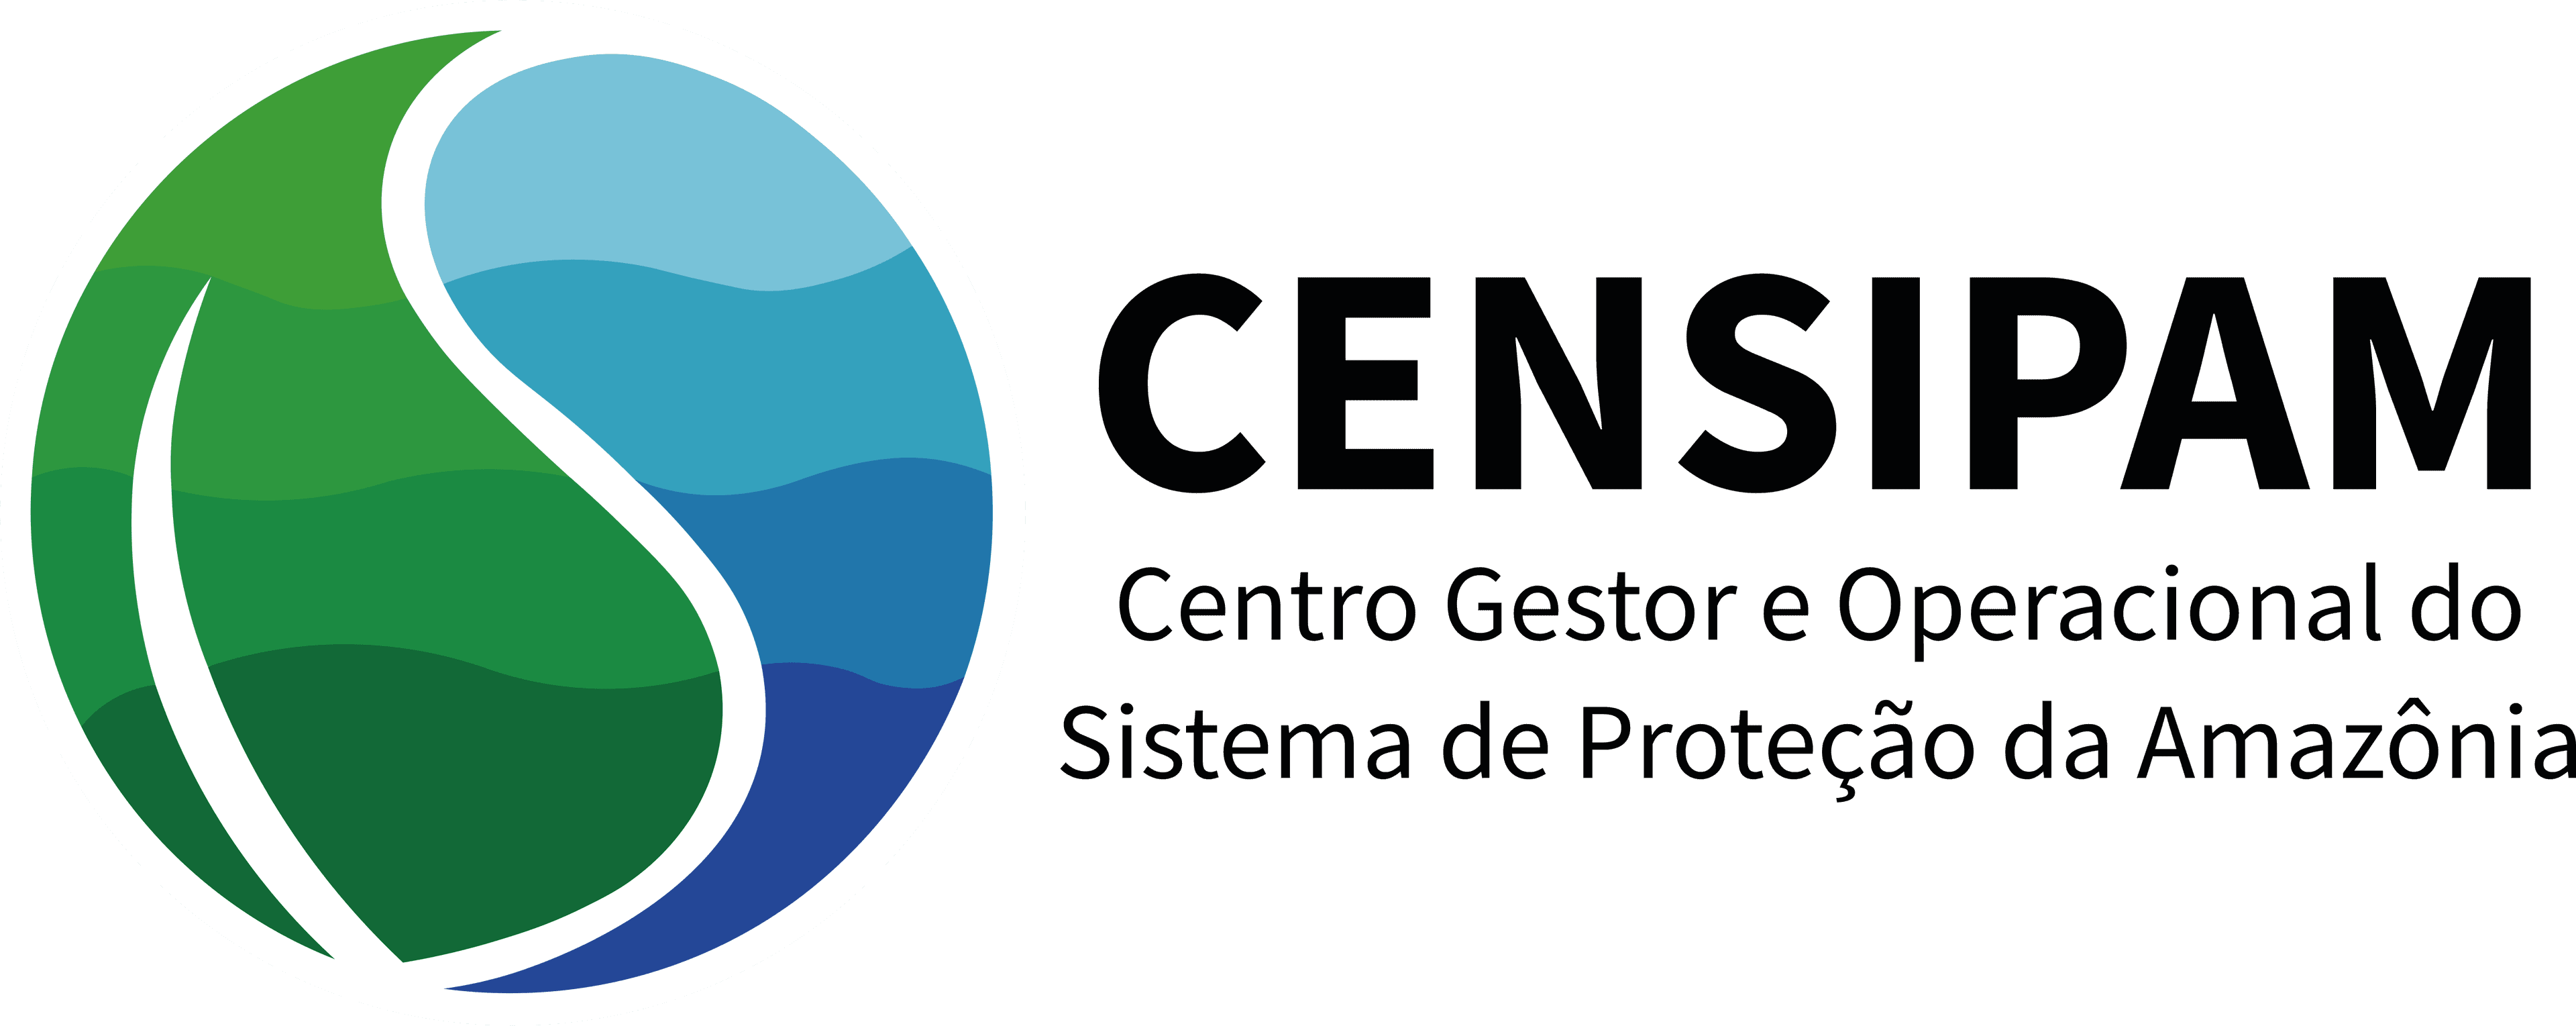 Censipam Logo